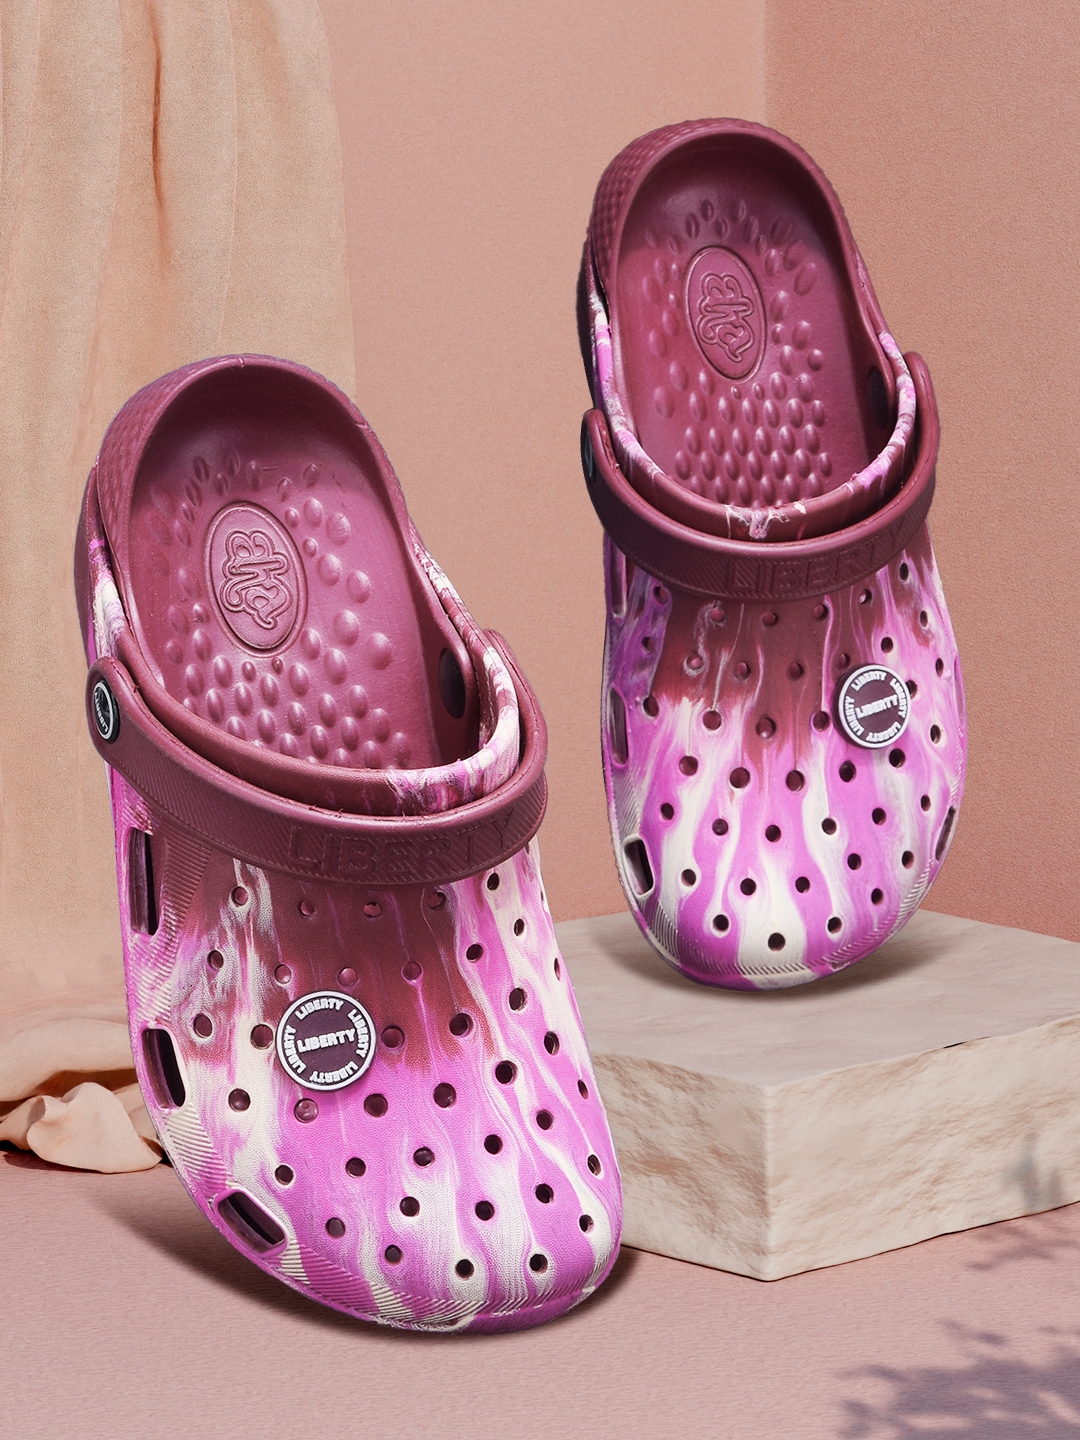 A-HA by Liberty LPMXT-962E Pink Clogs for Women